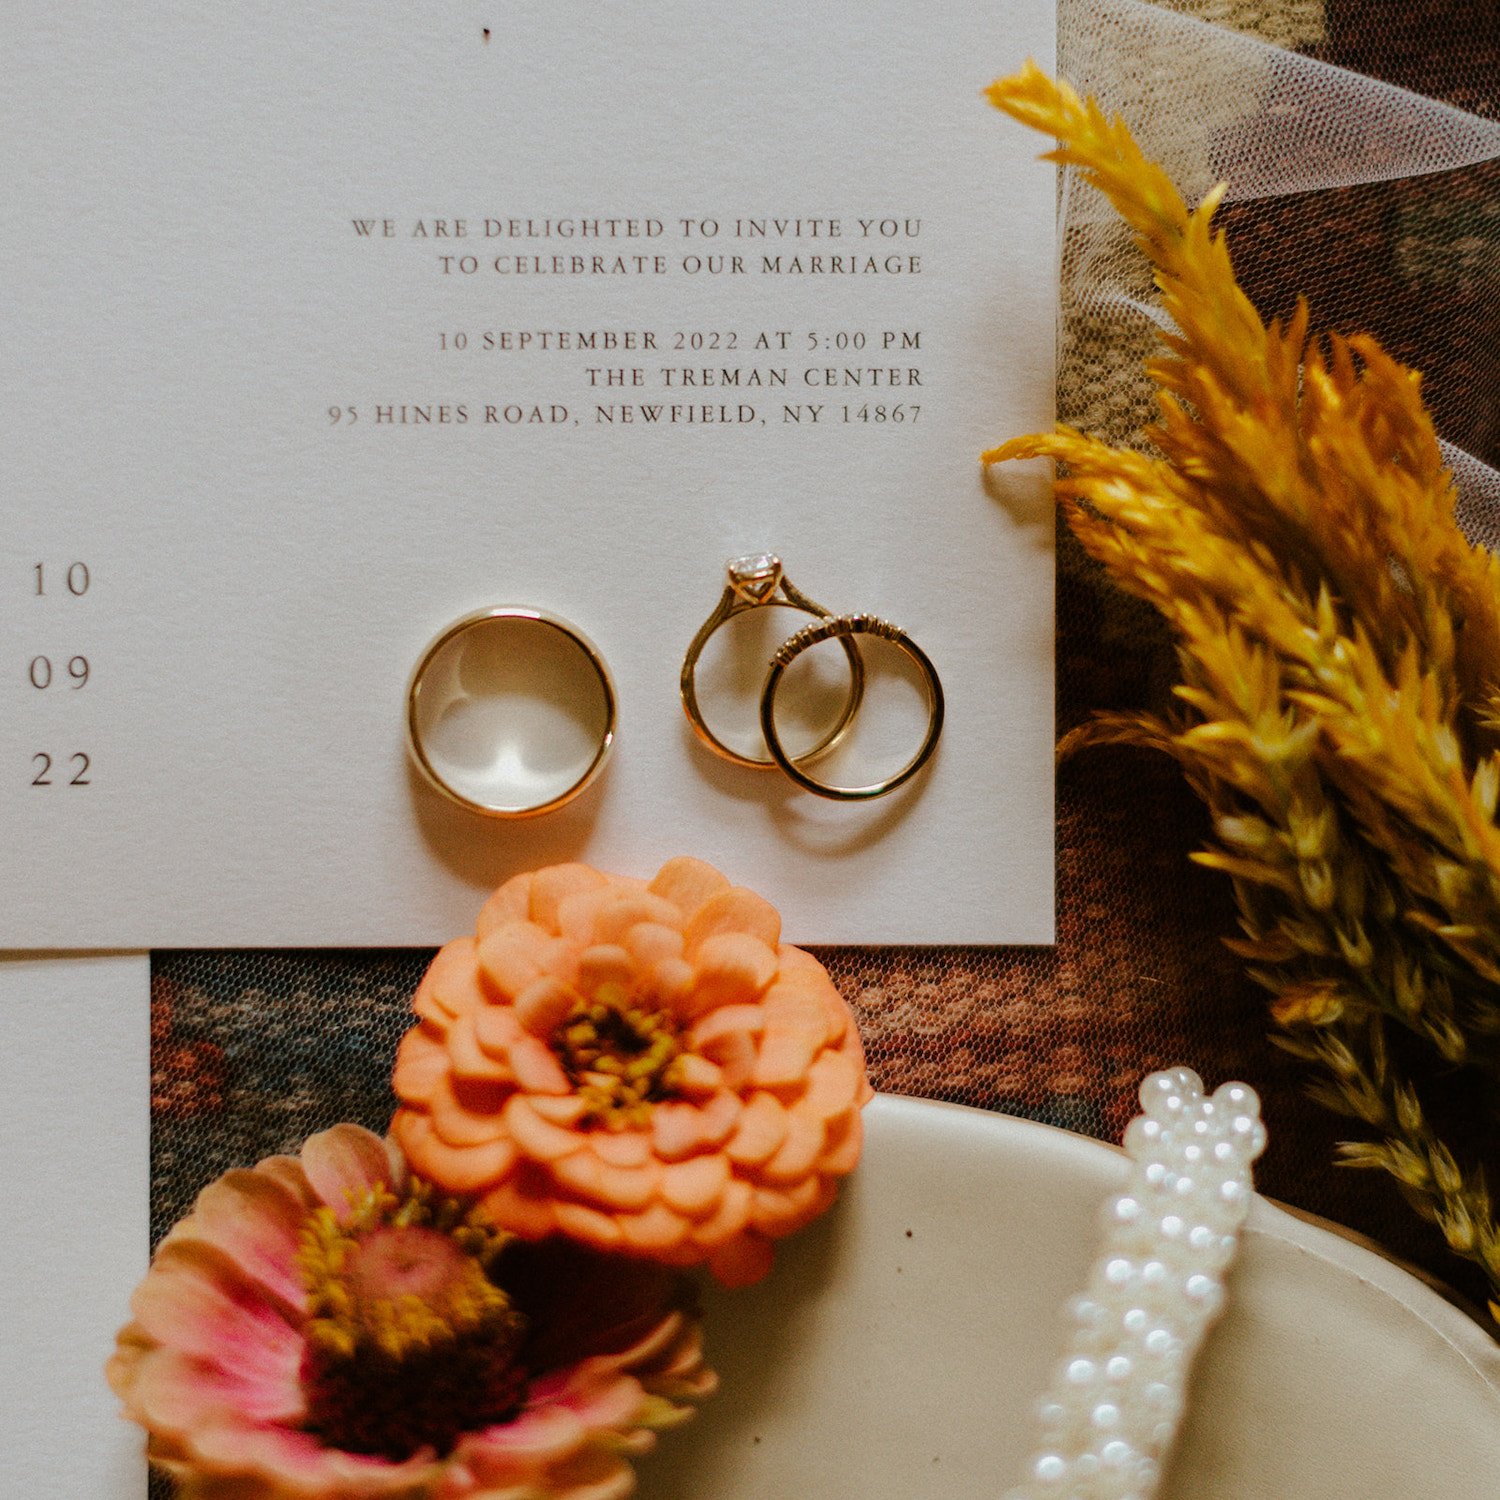 rings-invitation-5-tips-seamless-wedding-day-timeline-emilee-carpenter-photography.jpg